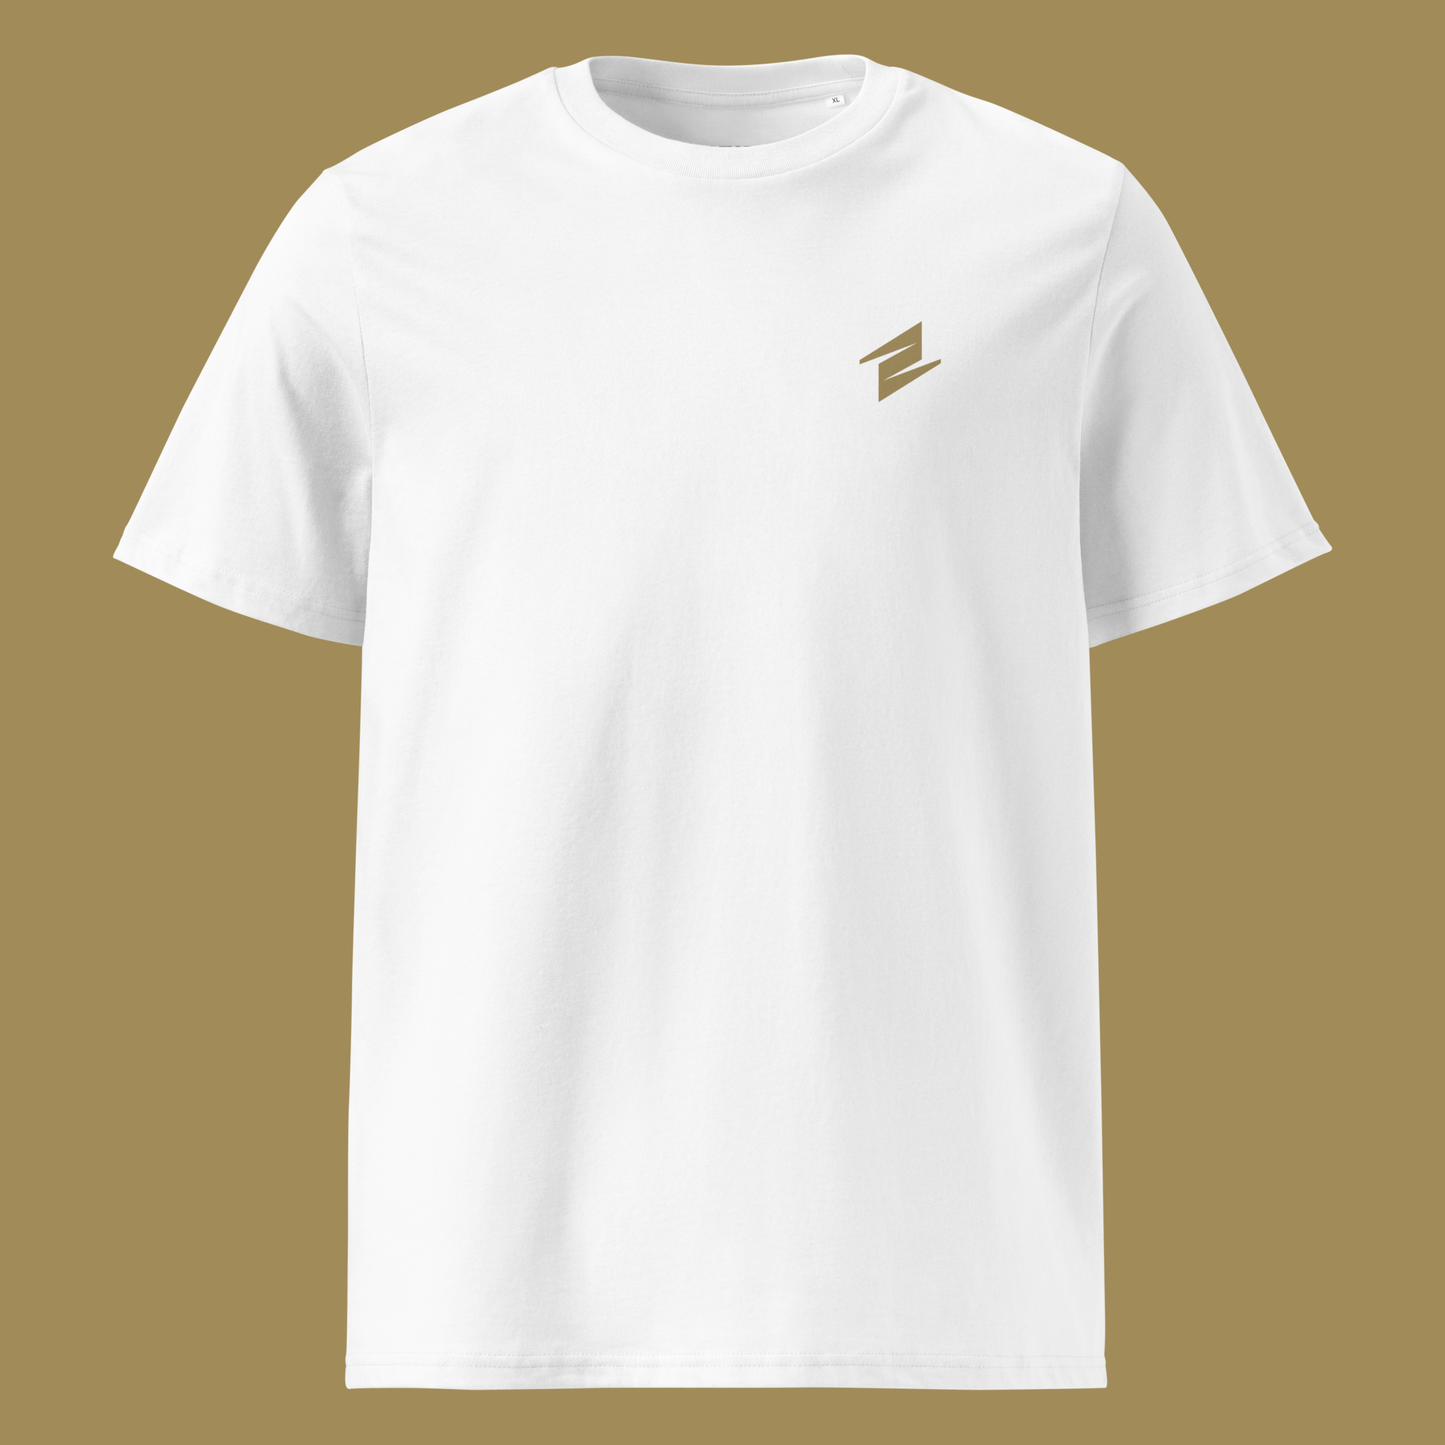 Digital Athletes White T-Shirt